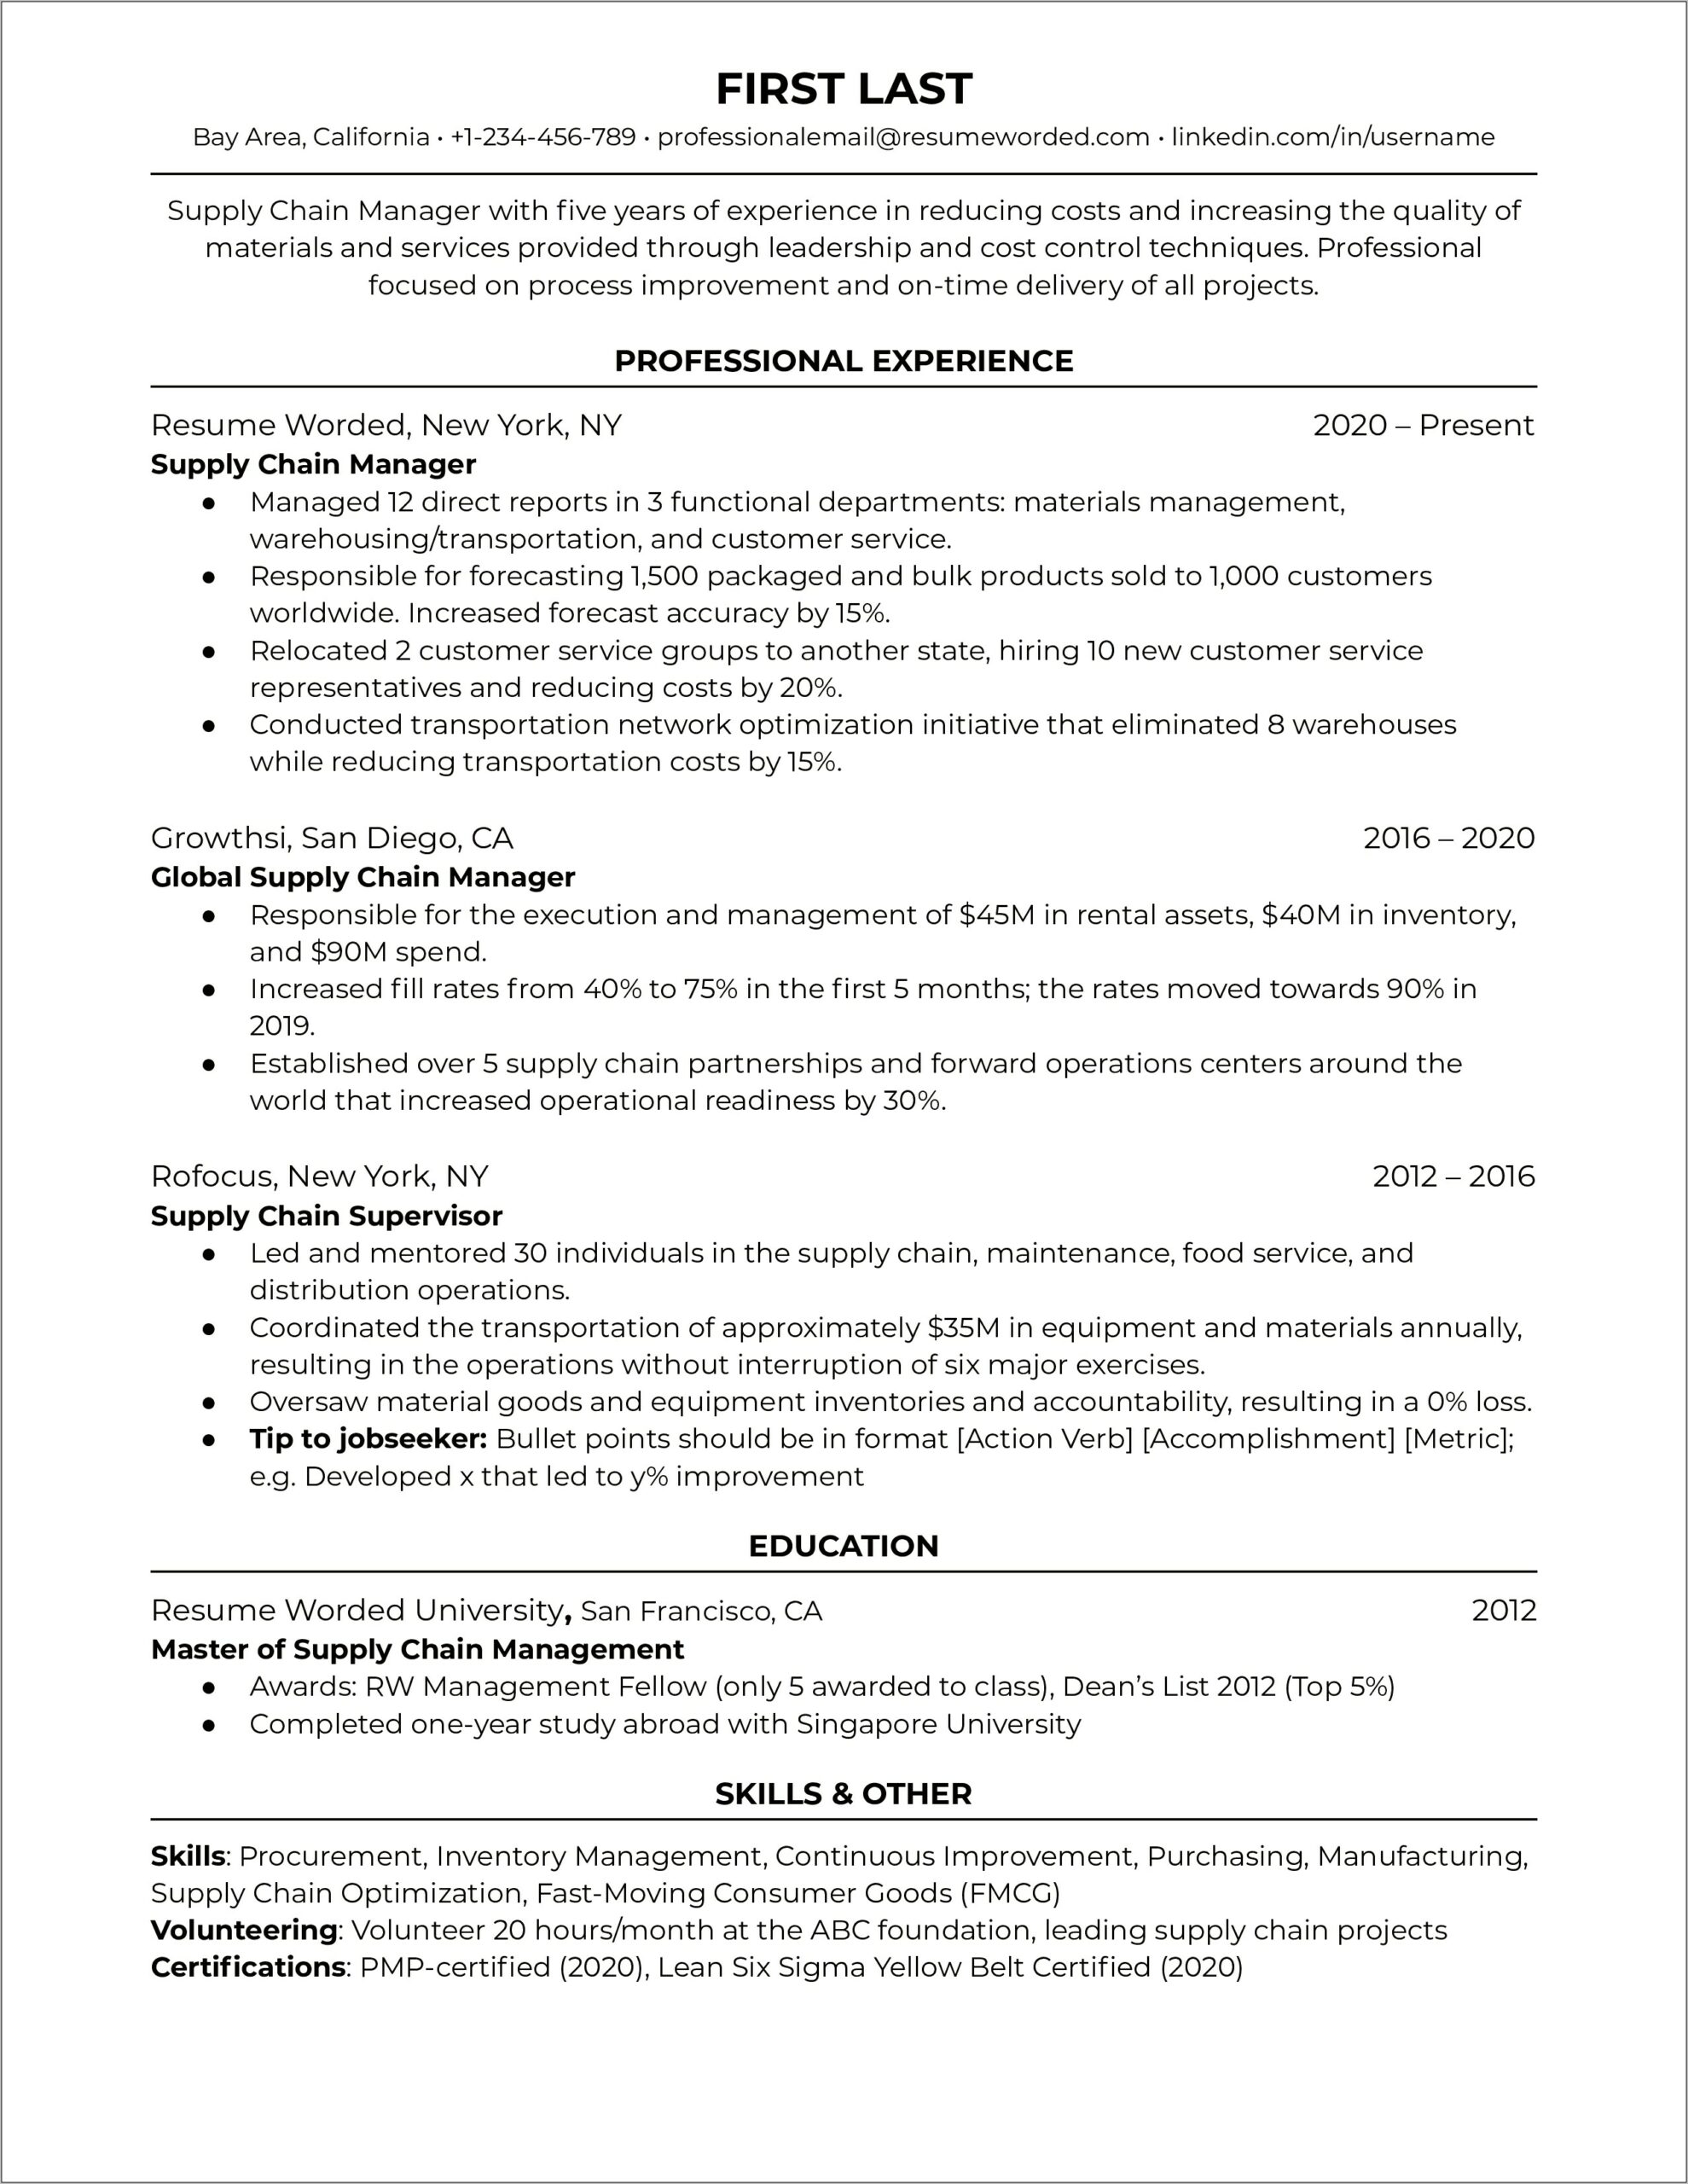 Resume For Job Outside If Field